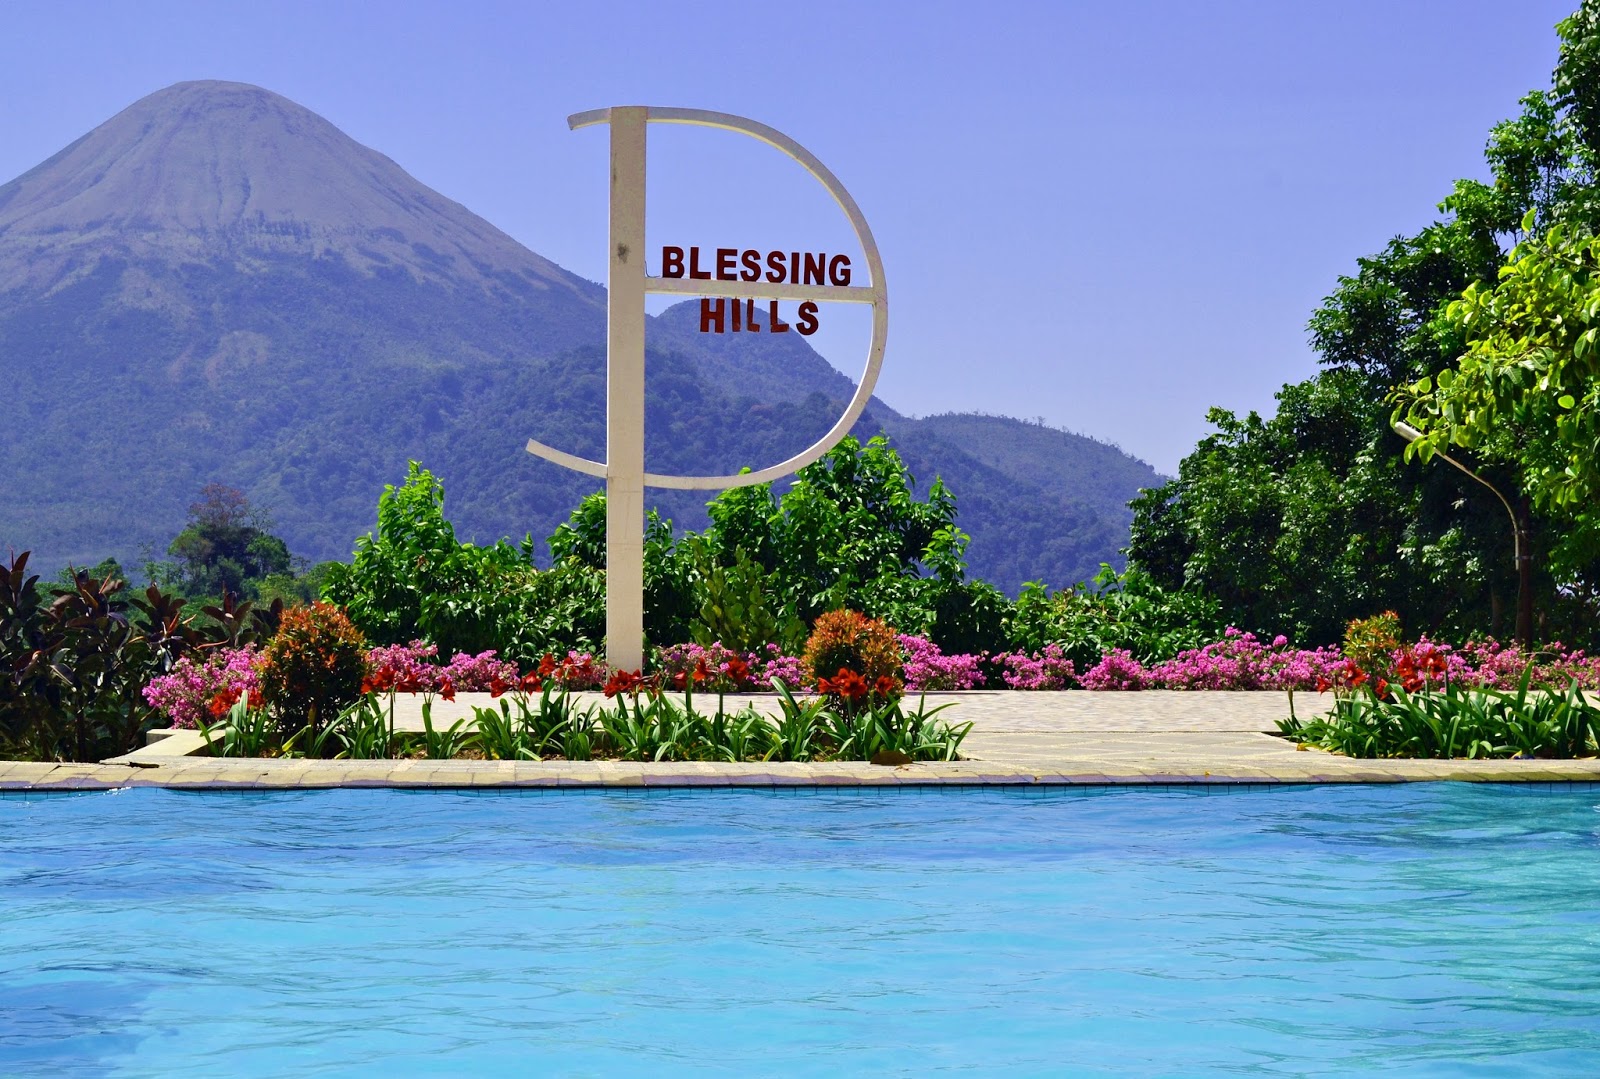 Lokasi dan Rute Menuju Blessing Hills Trawas Mojokerto